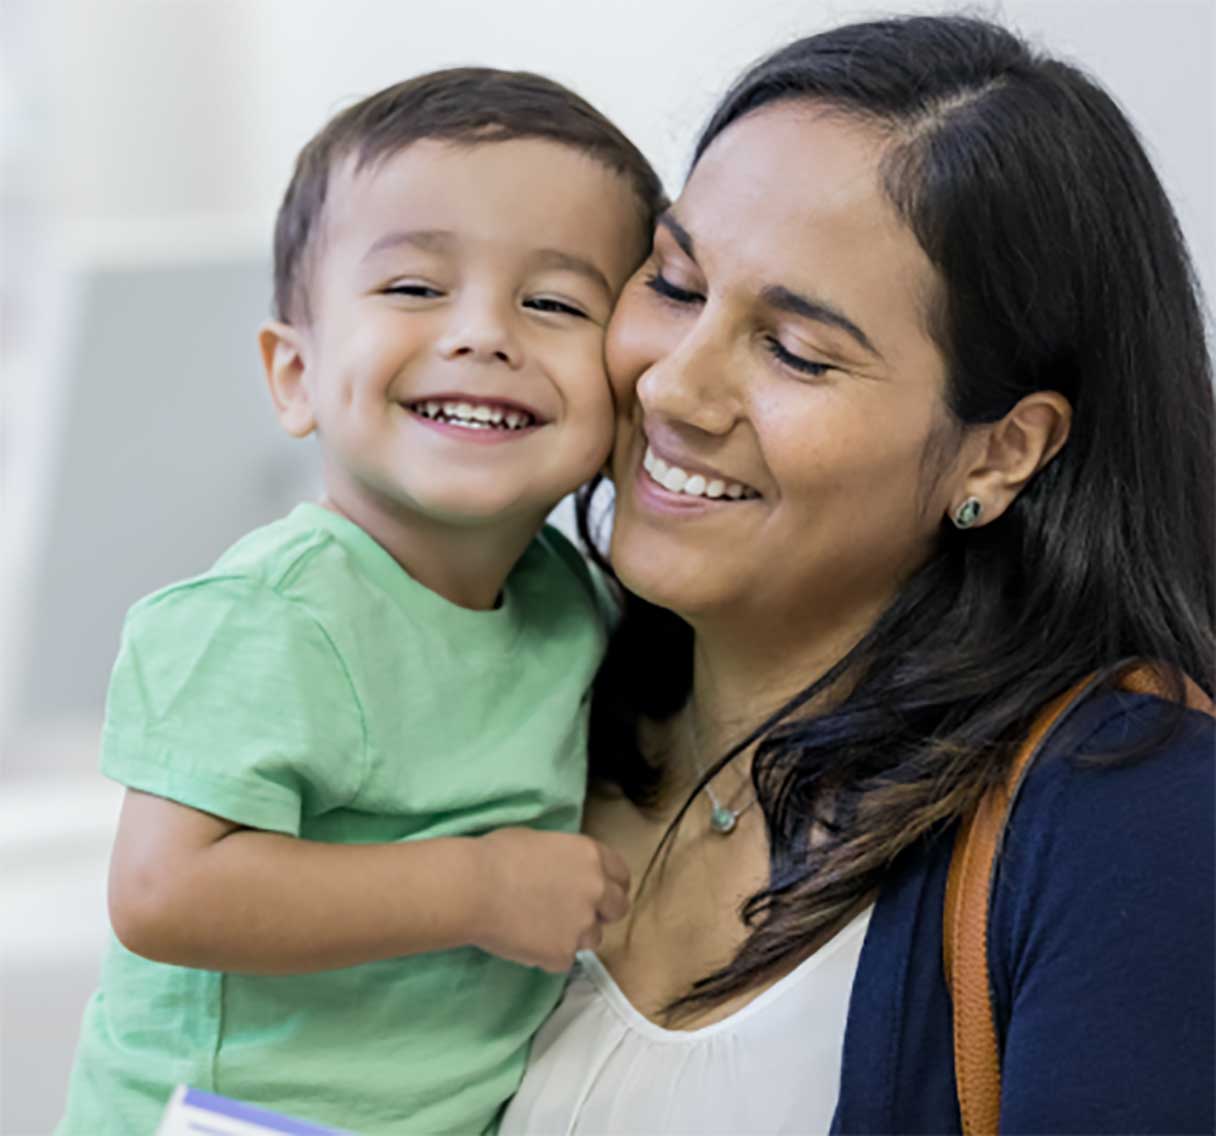 Woman holding toddler boy, both smiling cheek to cheek